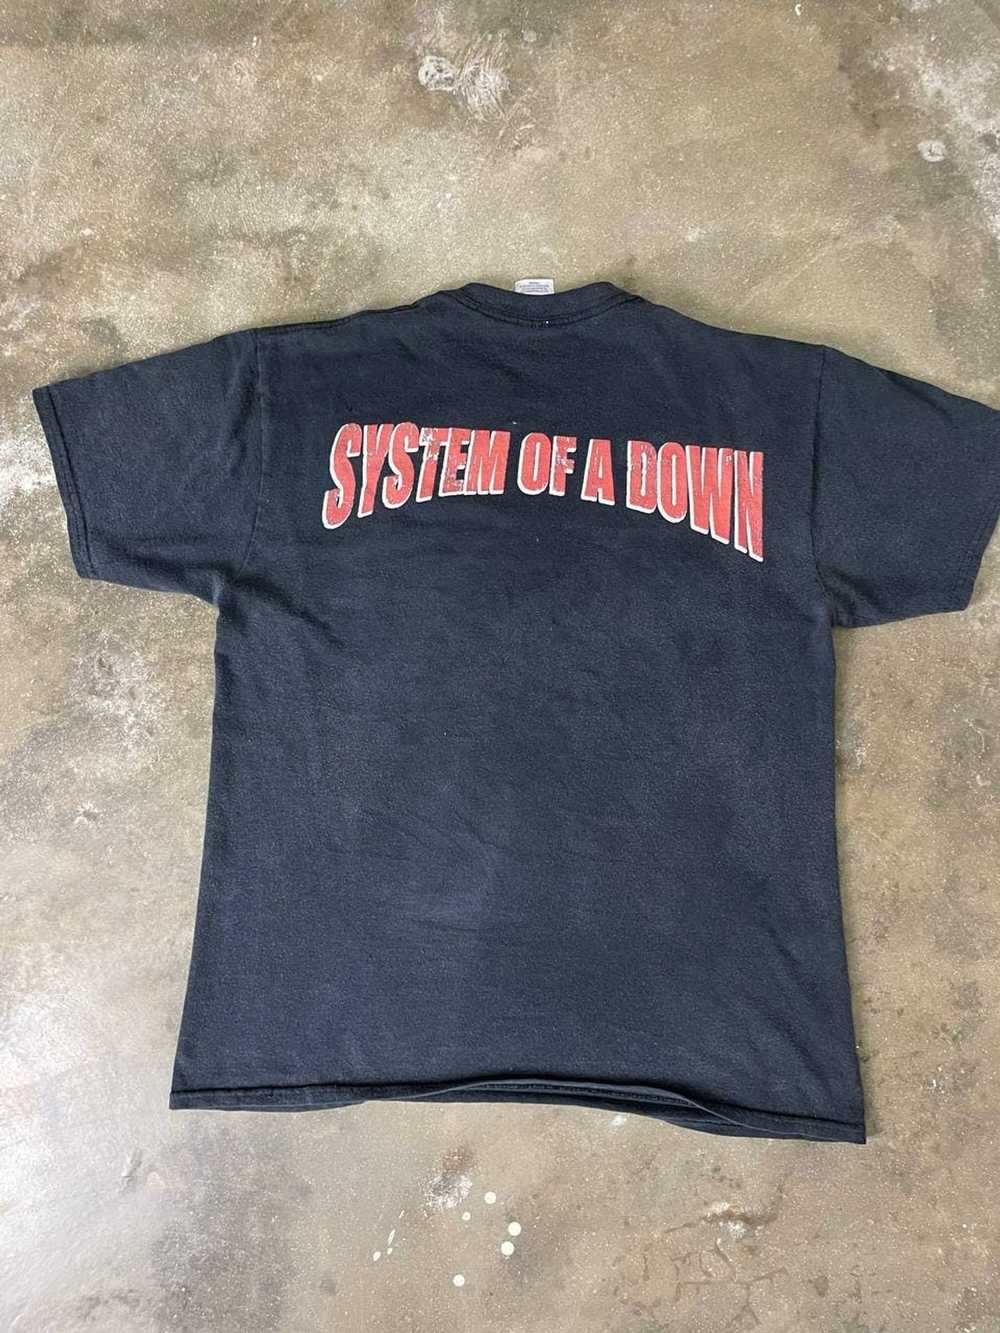 Vintage Vintage system of a down t-shirt - image 2